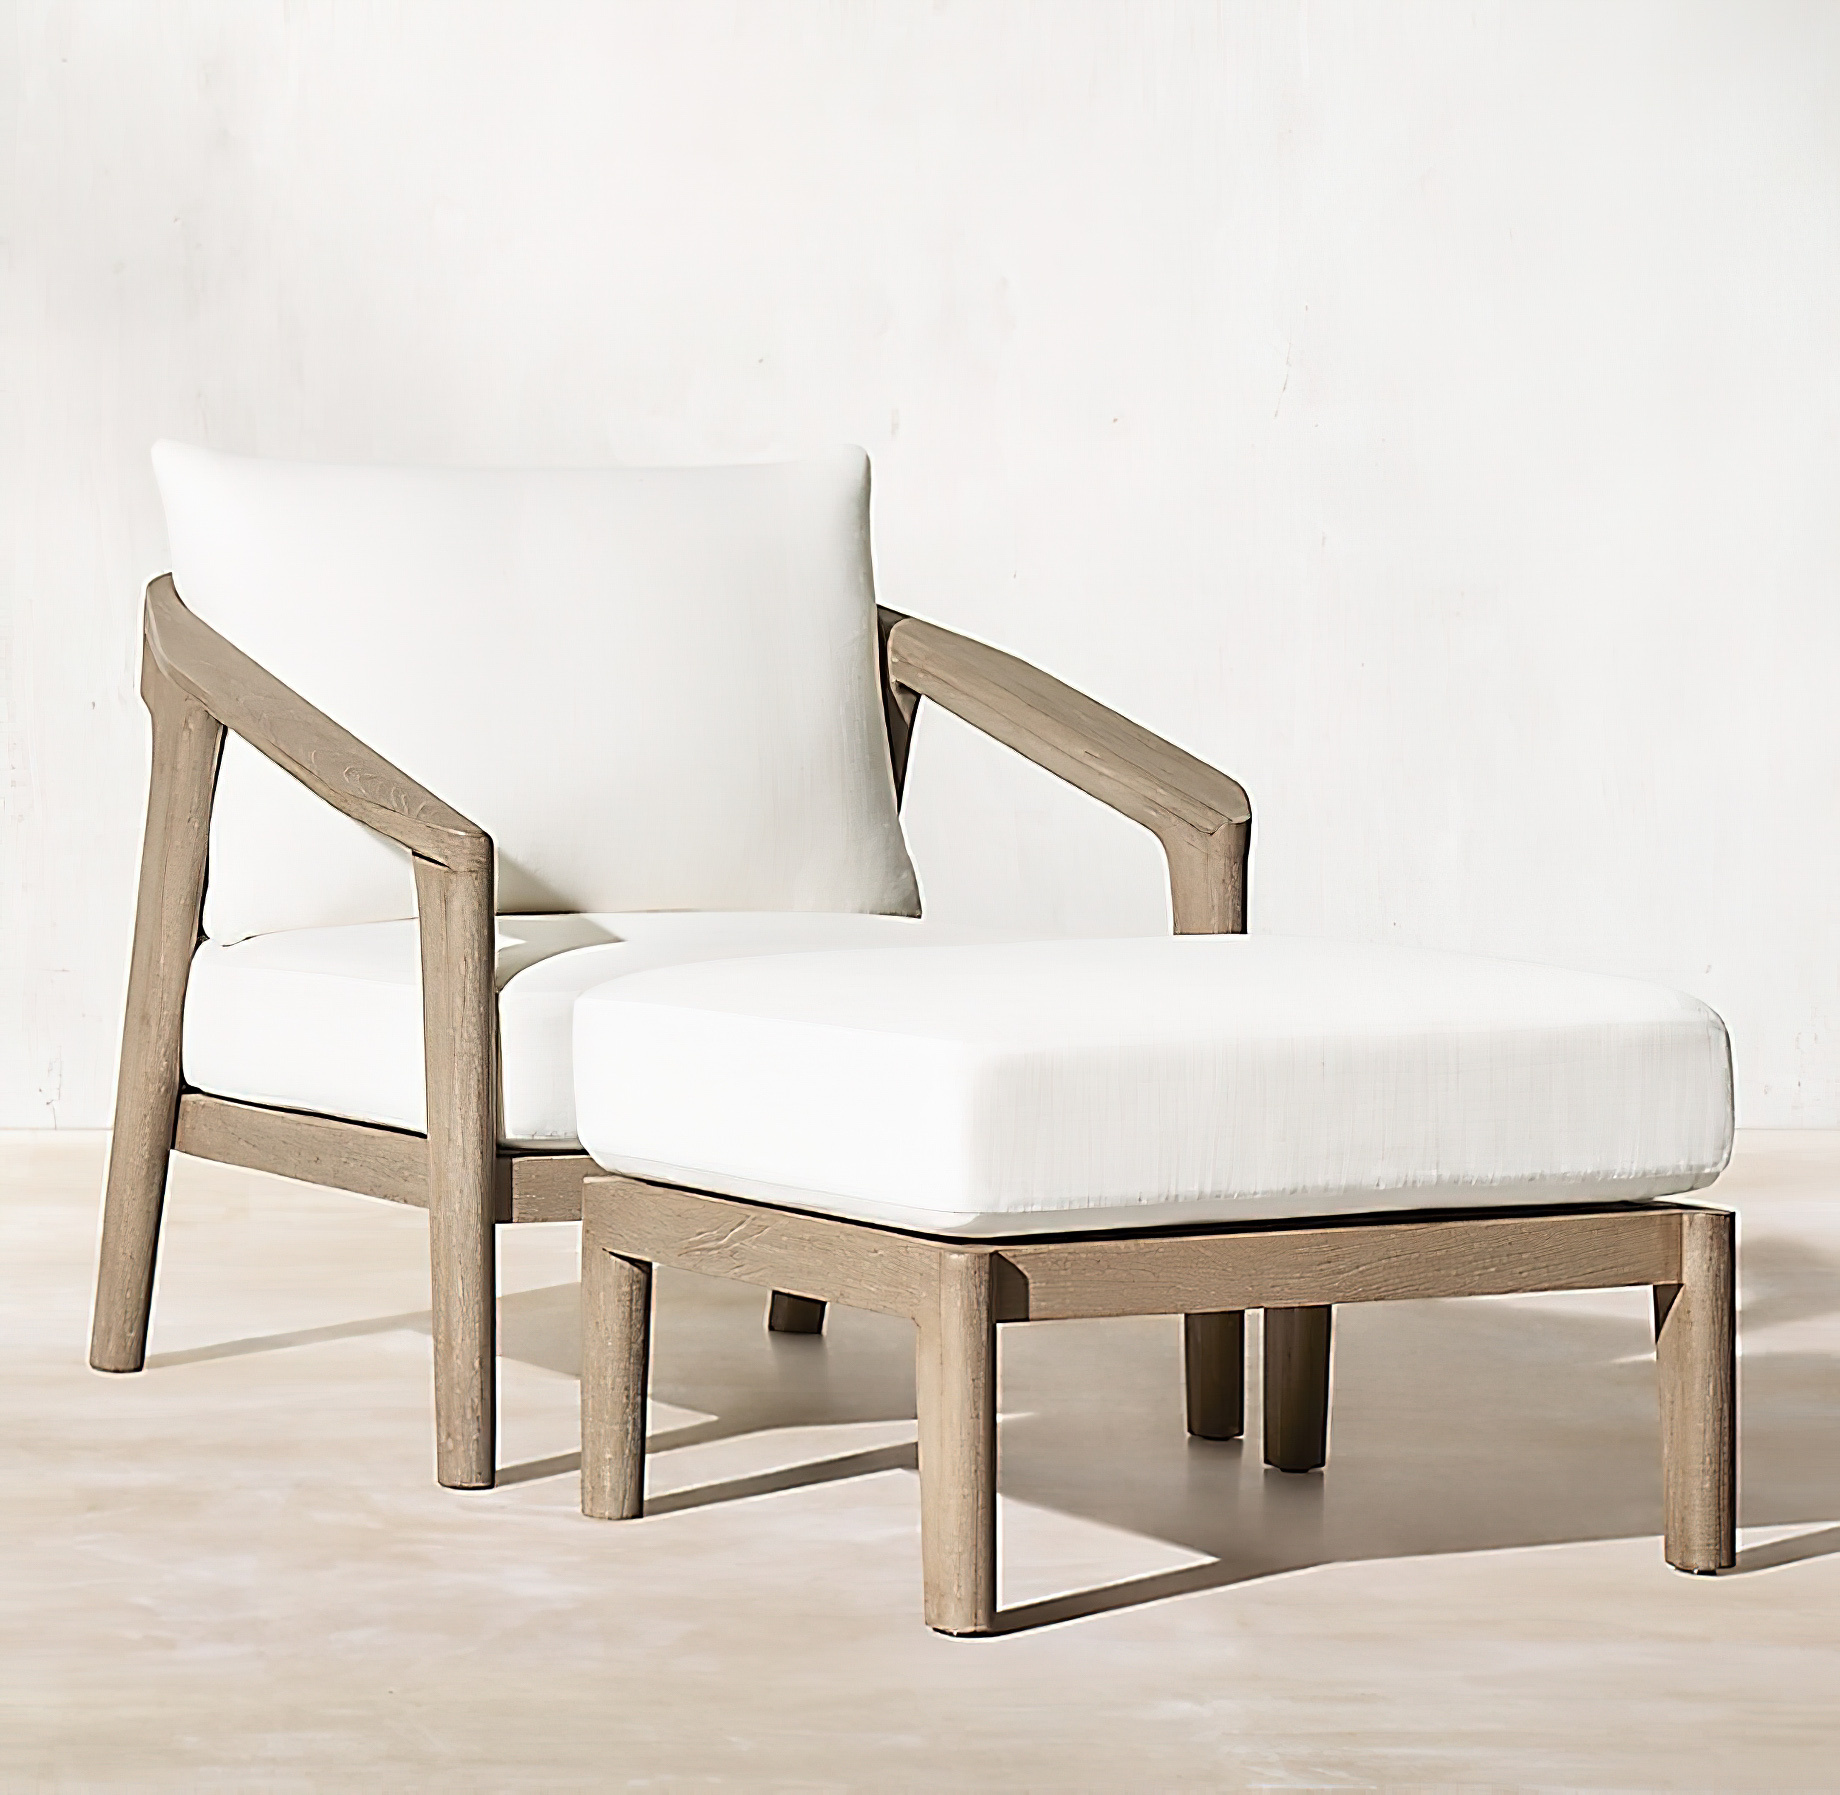 Malta Teak Collection Outdoor Furniture Design for RH - Ramon Esteve - Malta Teak Ottoman